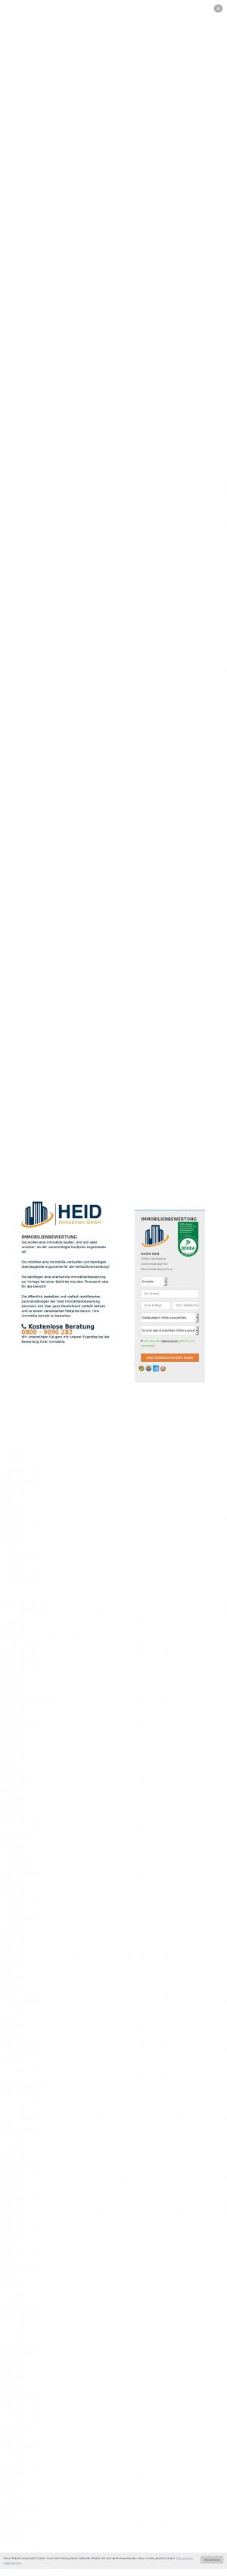 www.heid-immobilien.de